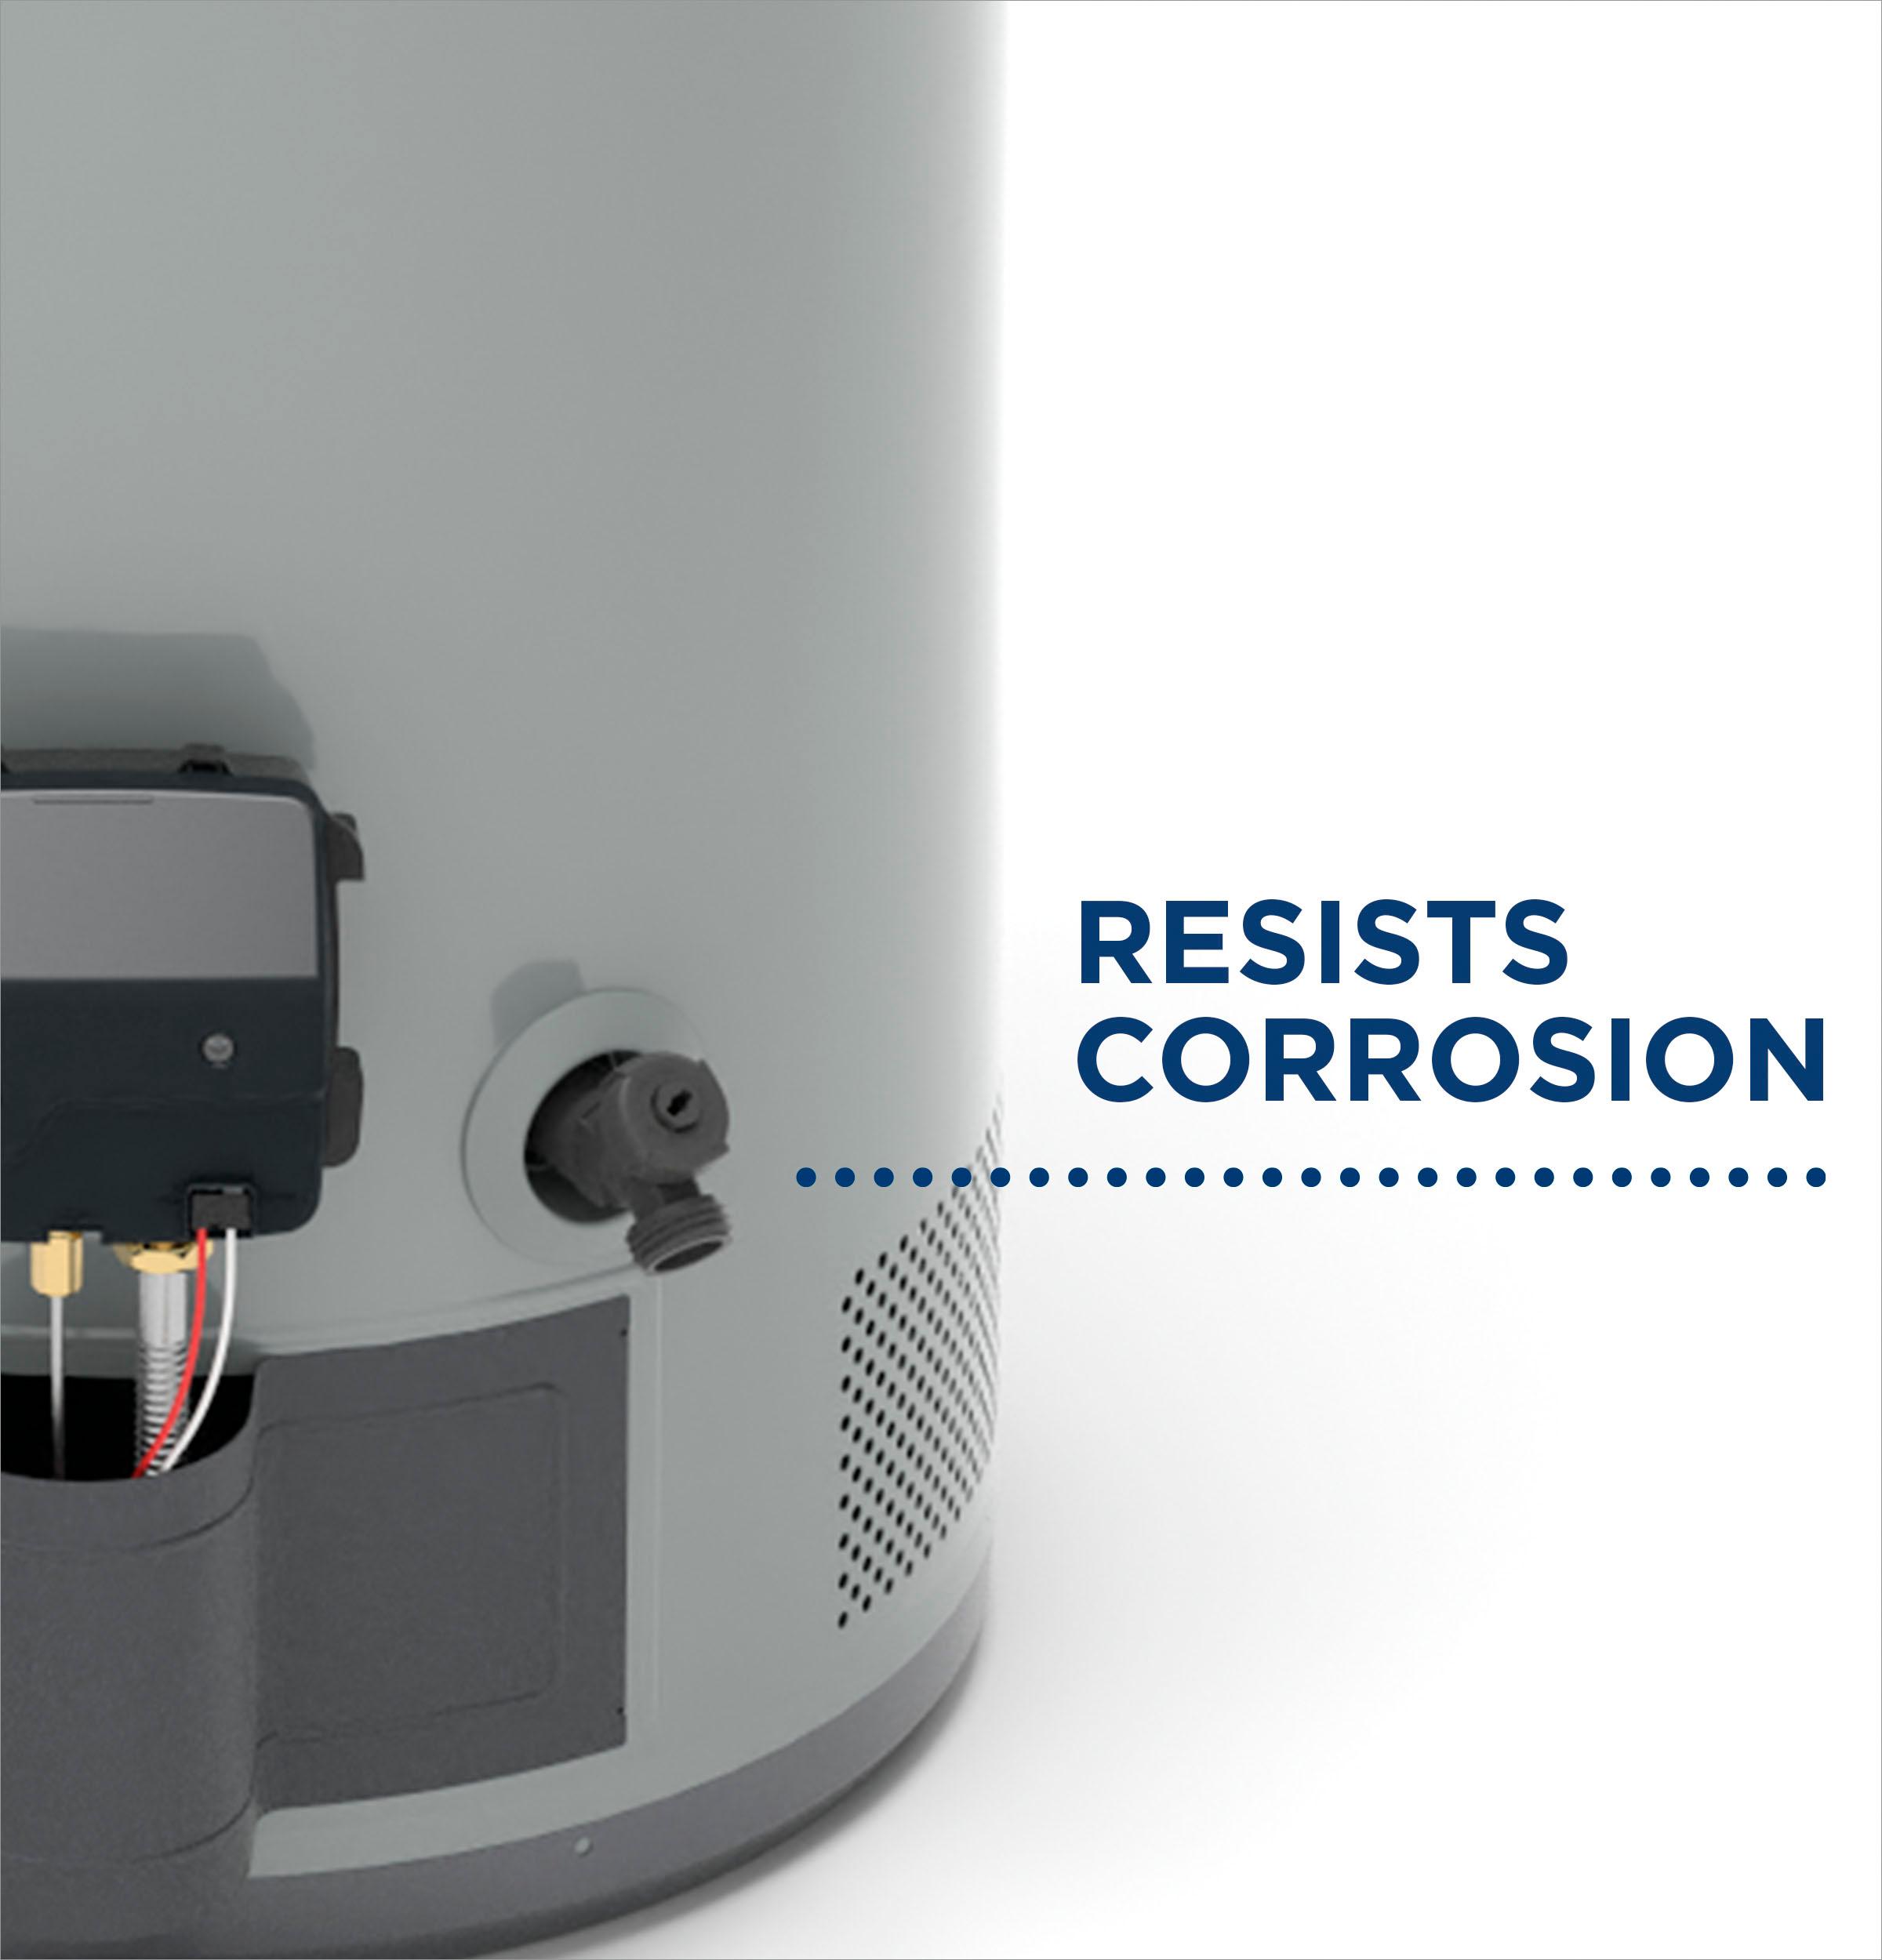 GE RealMAX Choice 40-Gallon Short Liquid Propane Atmospheric Water Heater